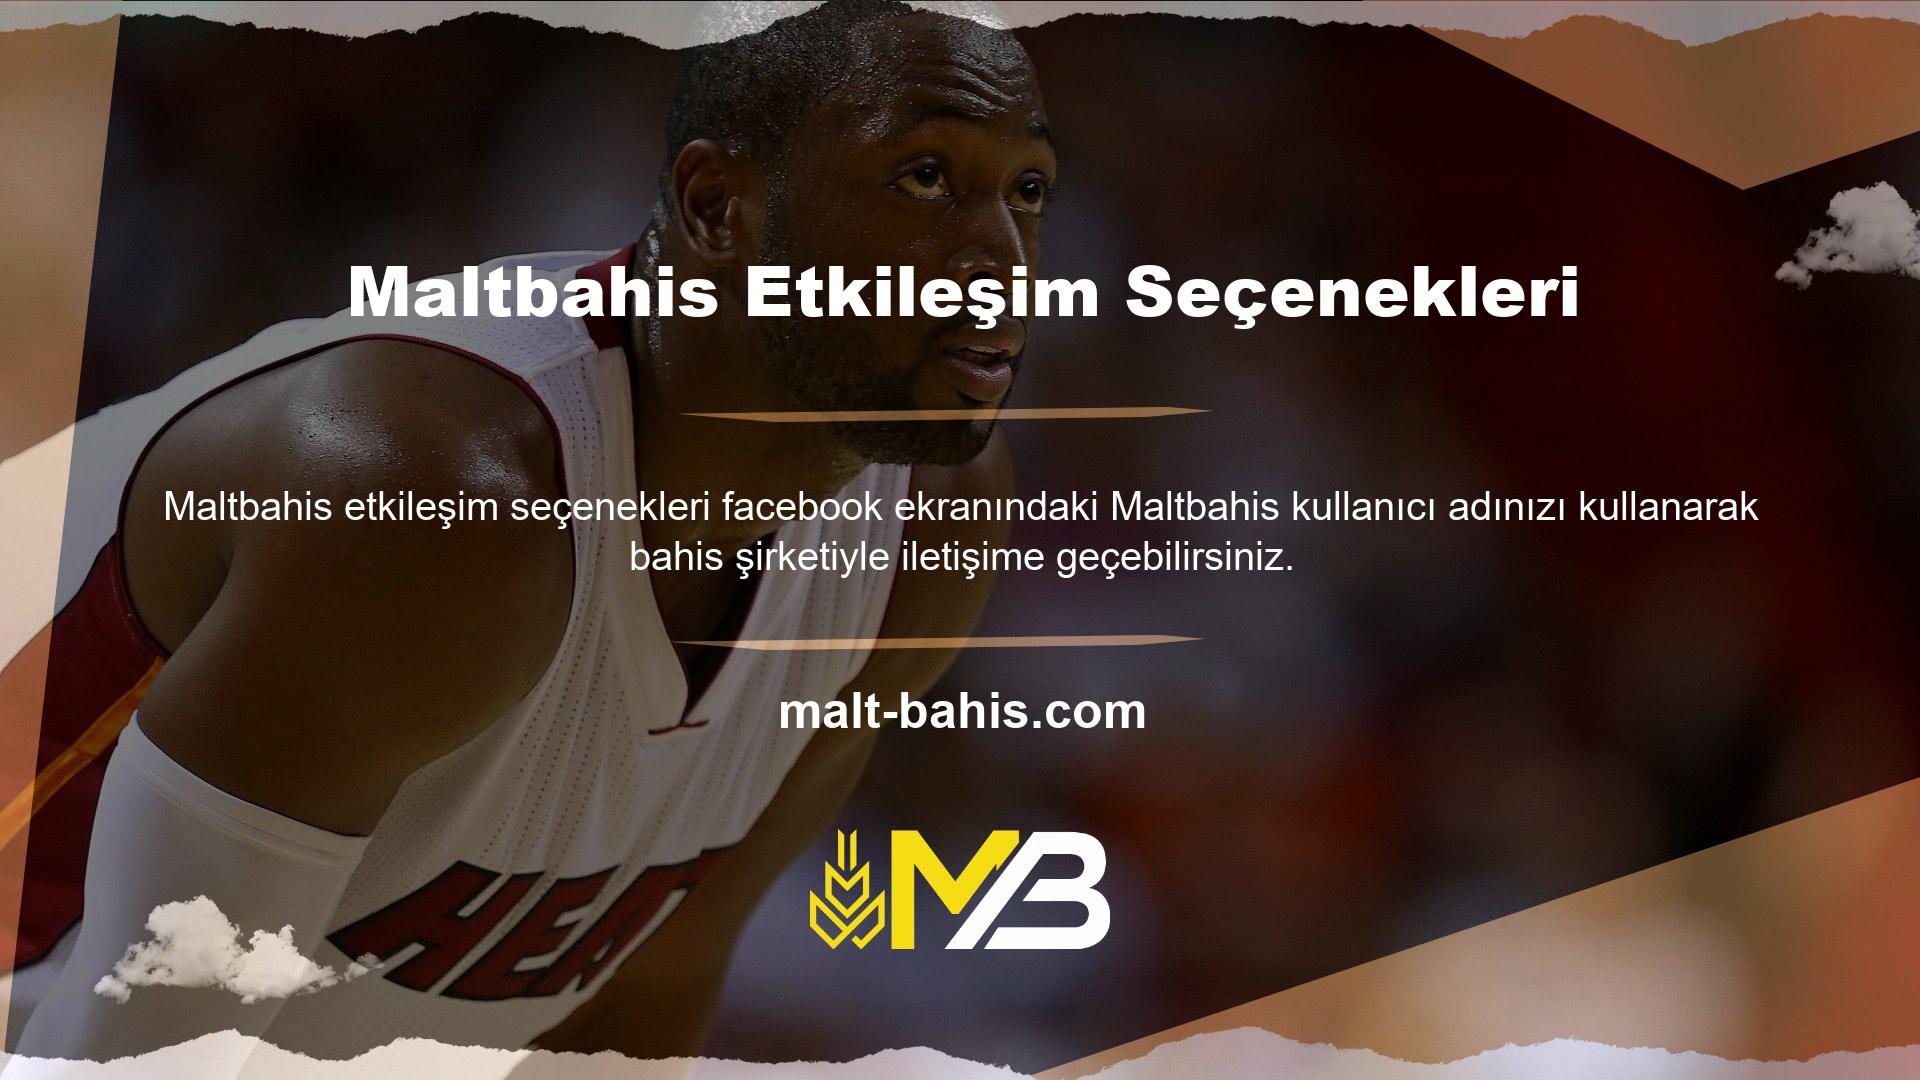 Twitter adresi Maltbahis'tir